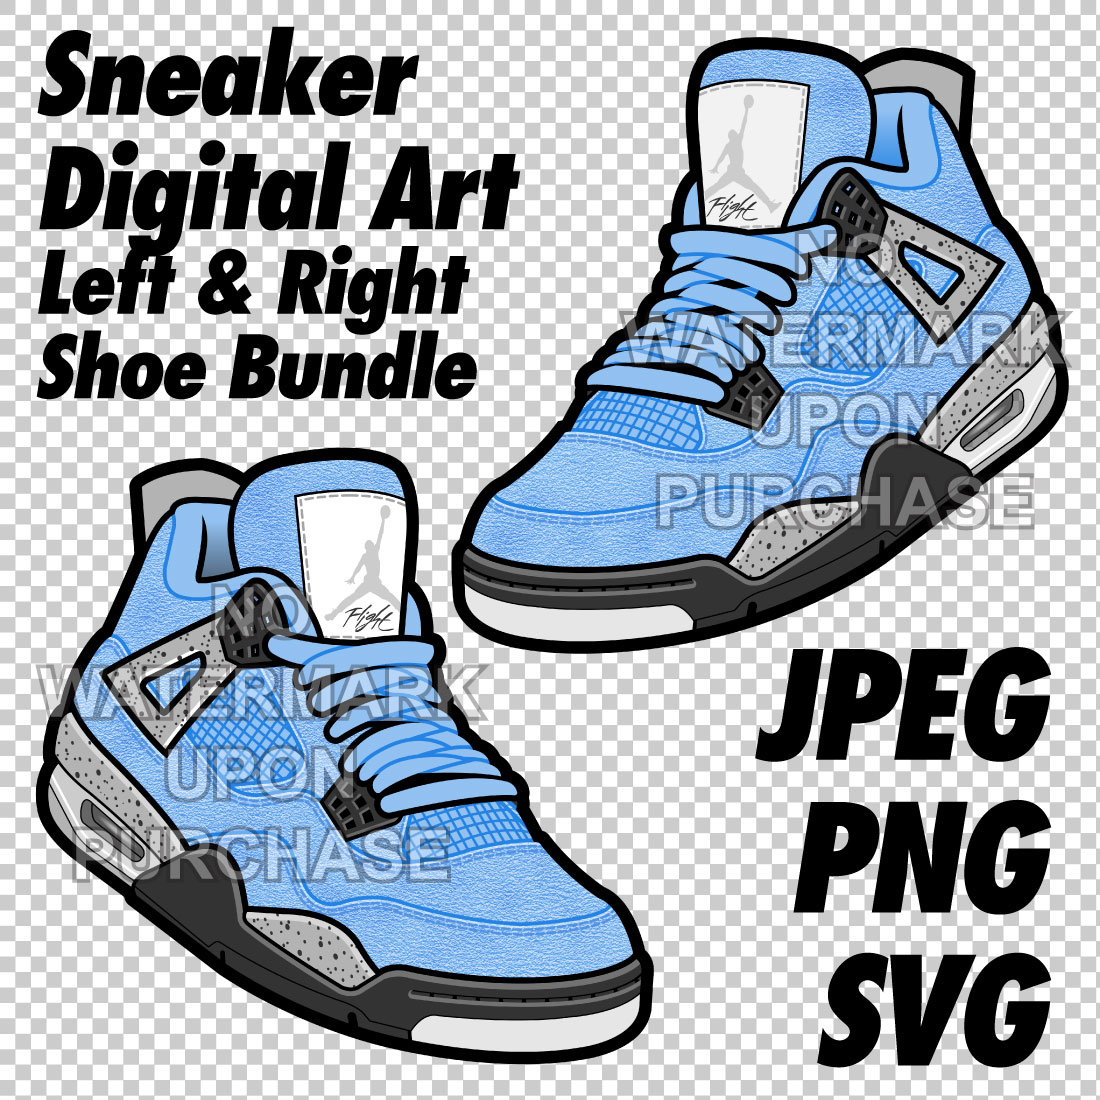 Air Jordan 4 UNC JPEG PNG SVG Sneaker Art right & left shoe bundle Digital Download cover image.